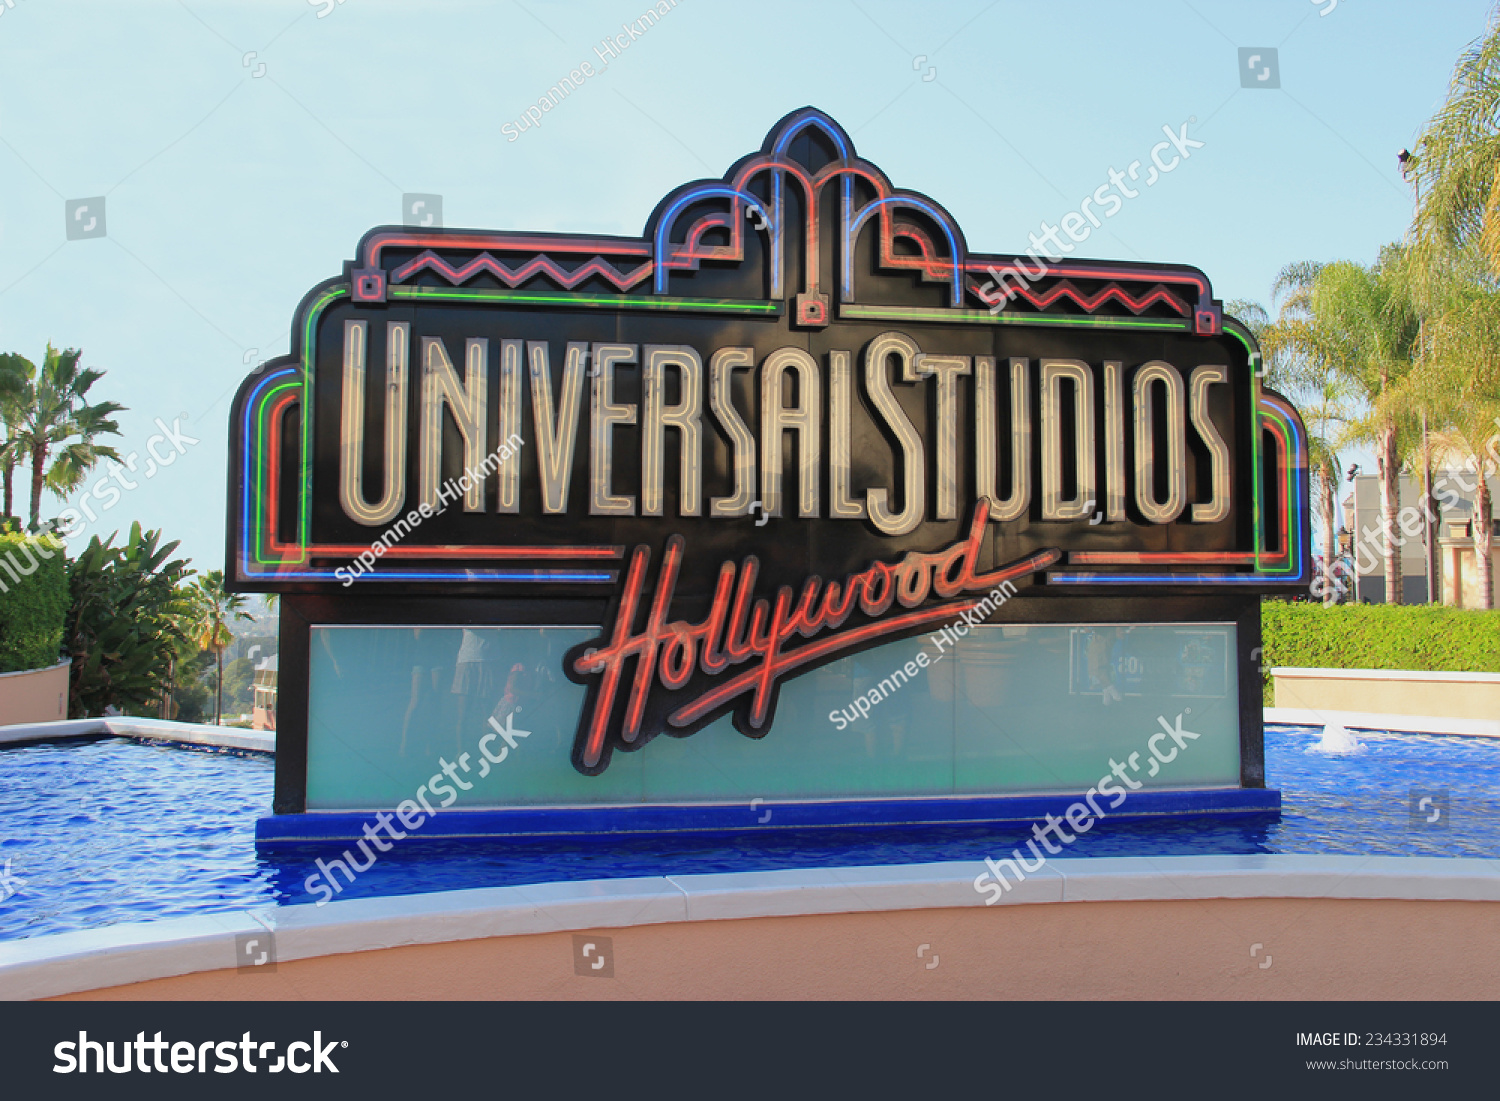 Stock Photo Los Angeles California Usa October Universal Studios Hollywood The Entertainment 234331894 